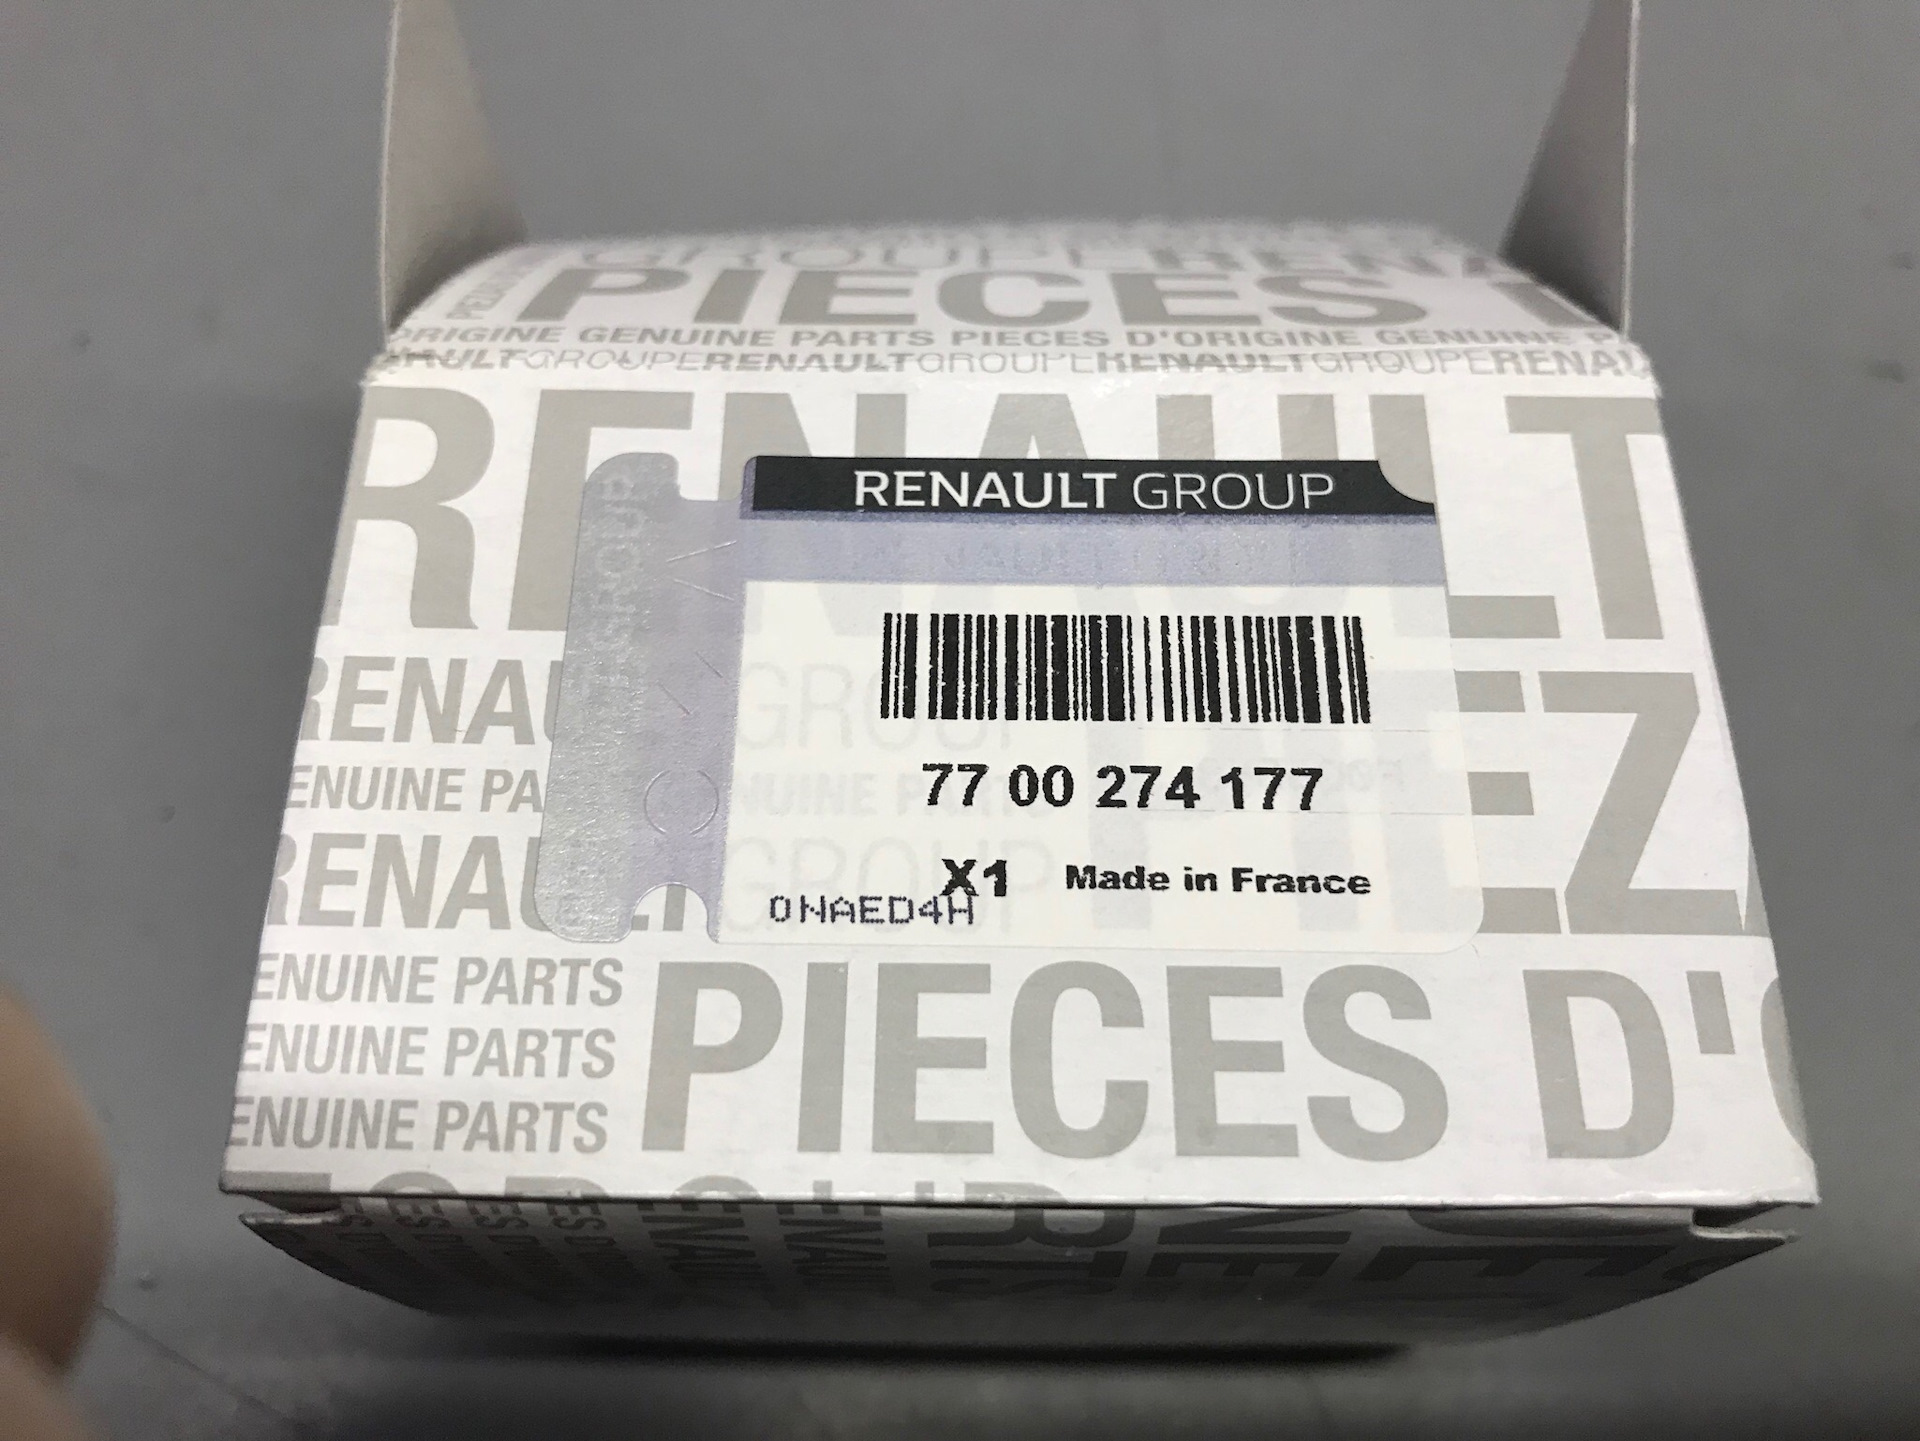 Куплю запчасти renault. Оригинальные запчасти Renault. Renault Group запчасти. Оригинальная коробка Renault. Рено запчасти оригинал.